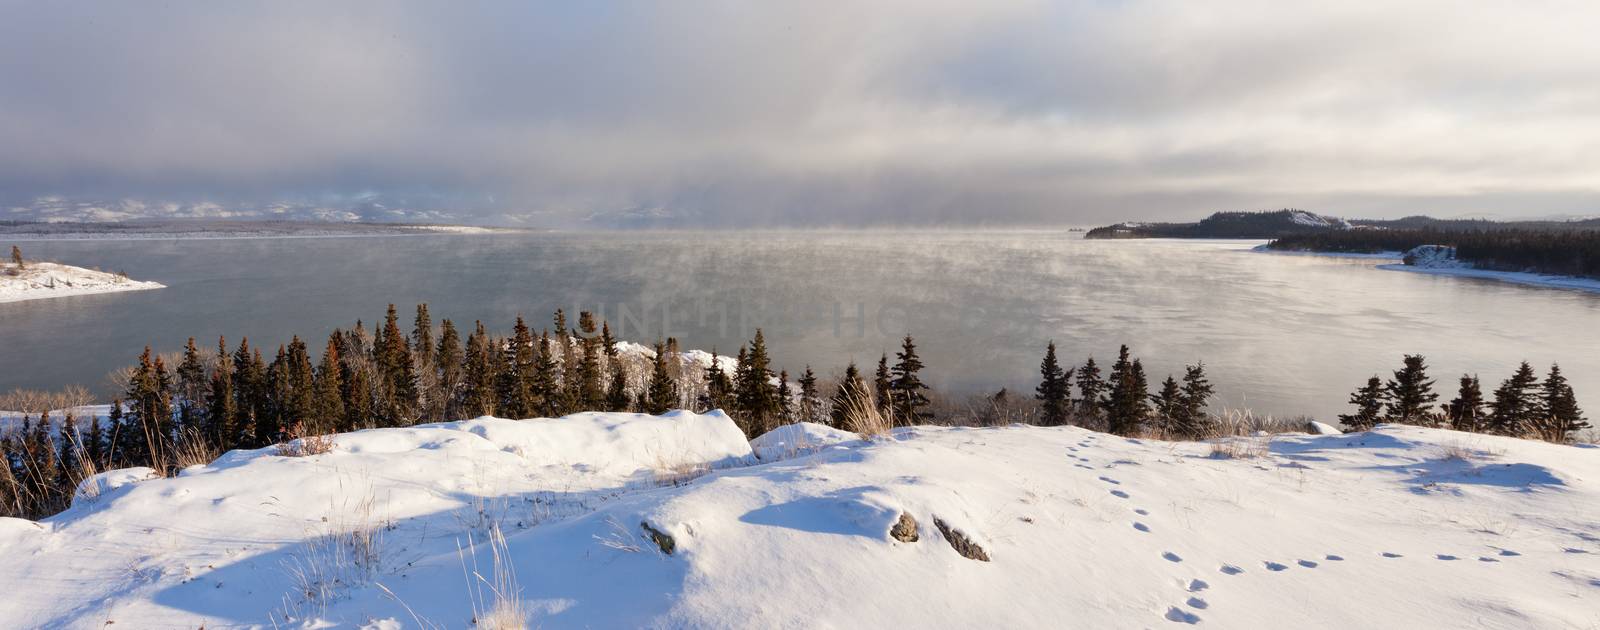 Steaming Lake Laberge Yukon pano before freezing by PiLens